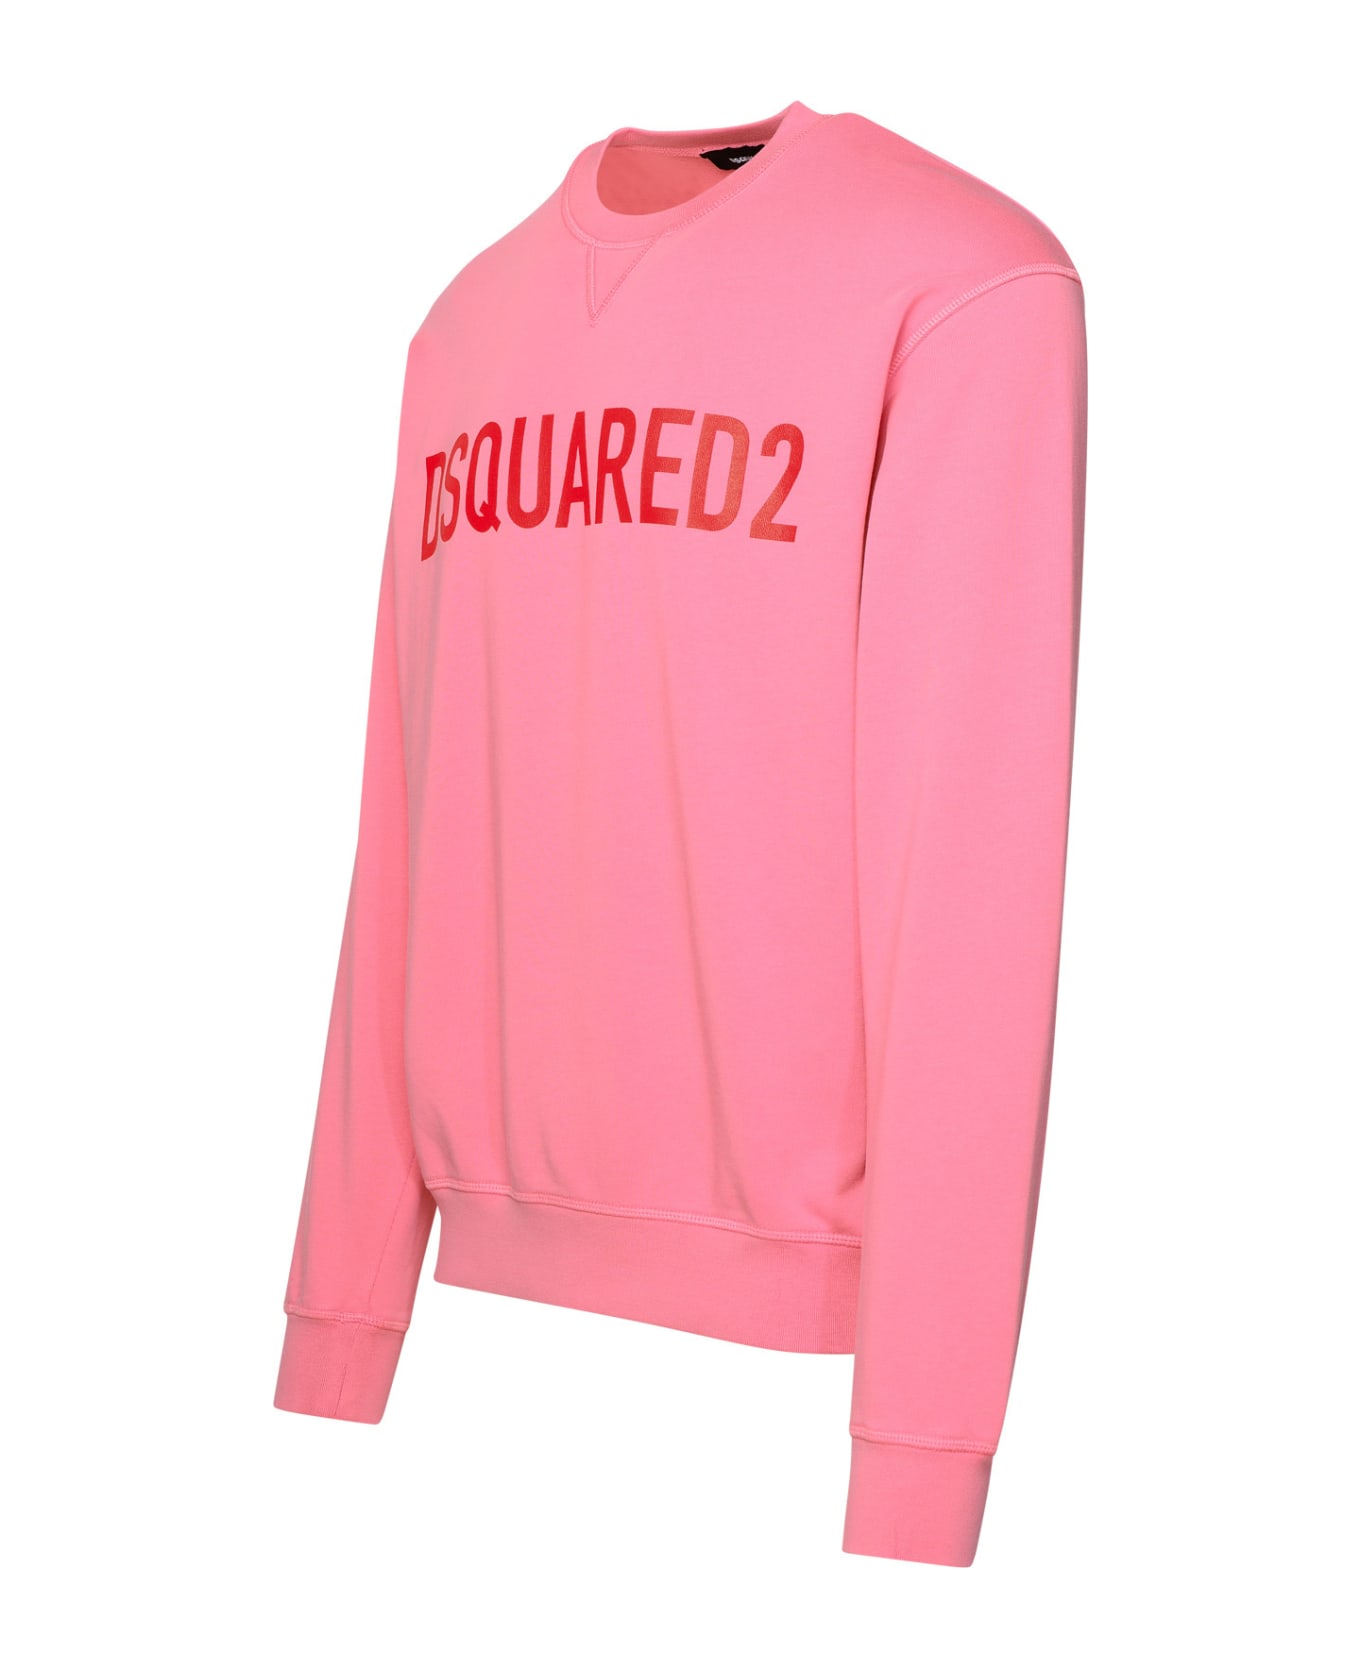 Dsquared2 Cotton Sweatshirt - Pink フリース